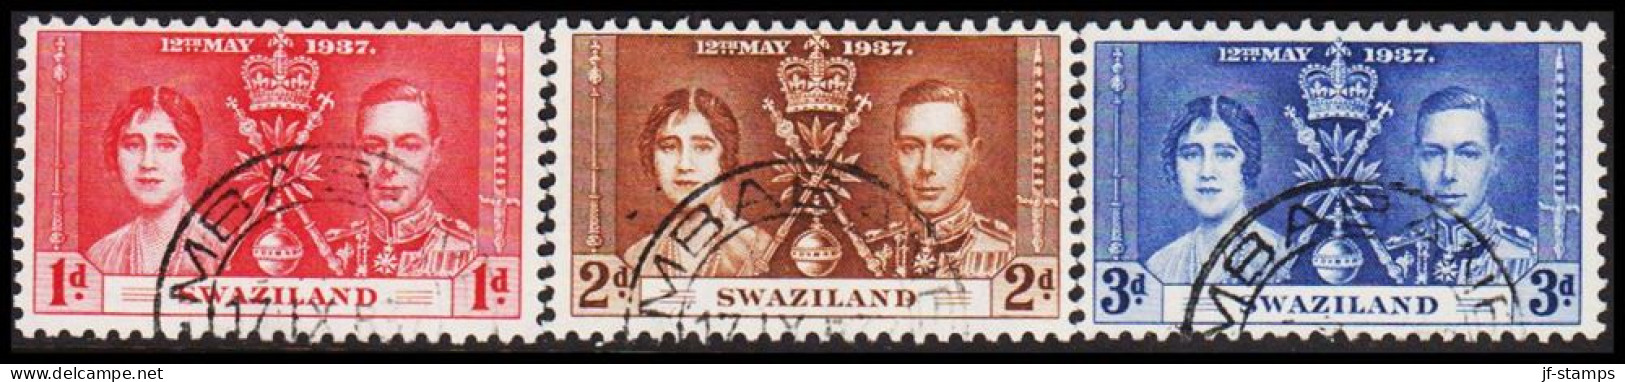 1937. SWAZILAND. Georg VI Coronation Complete Set. (MICHEL 24-26) - JF537478 - Swasiland (...-1967)